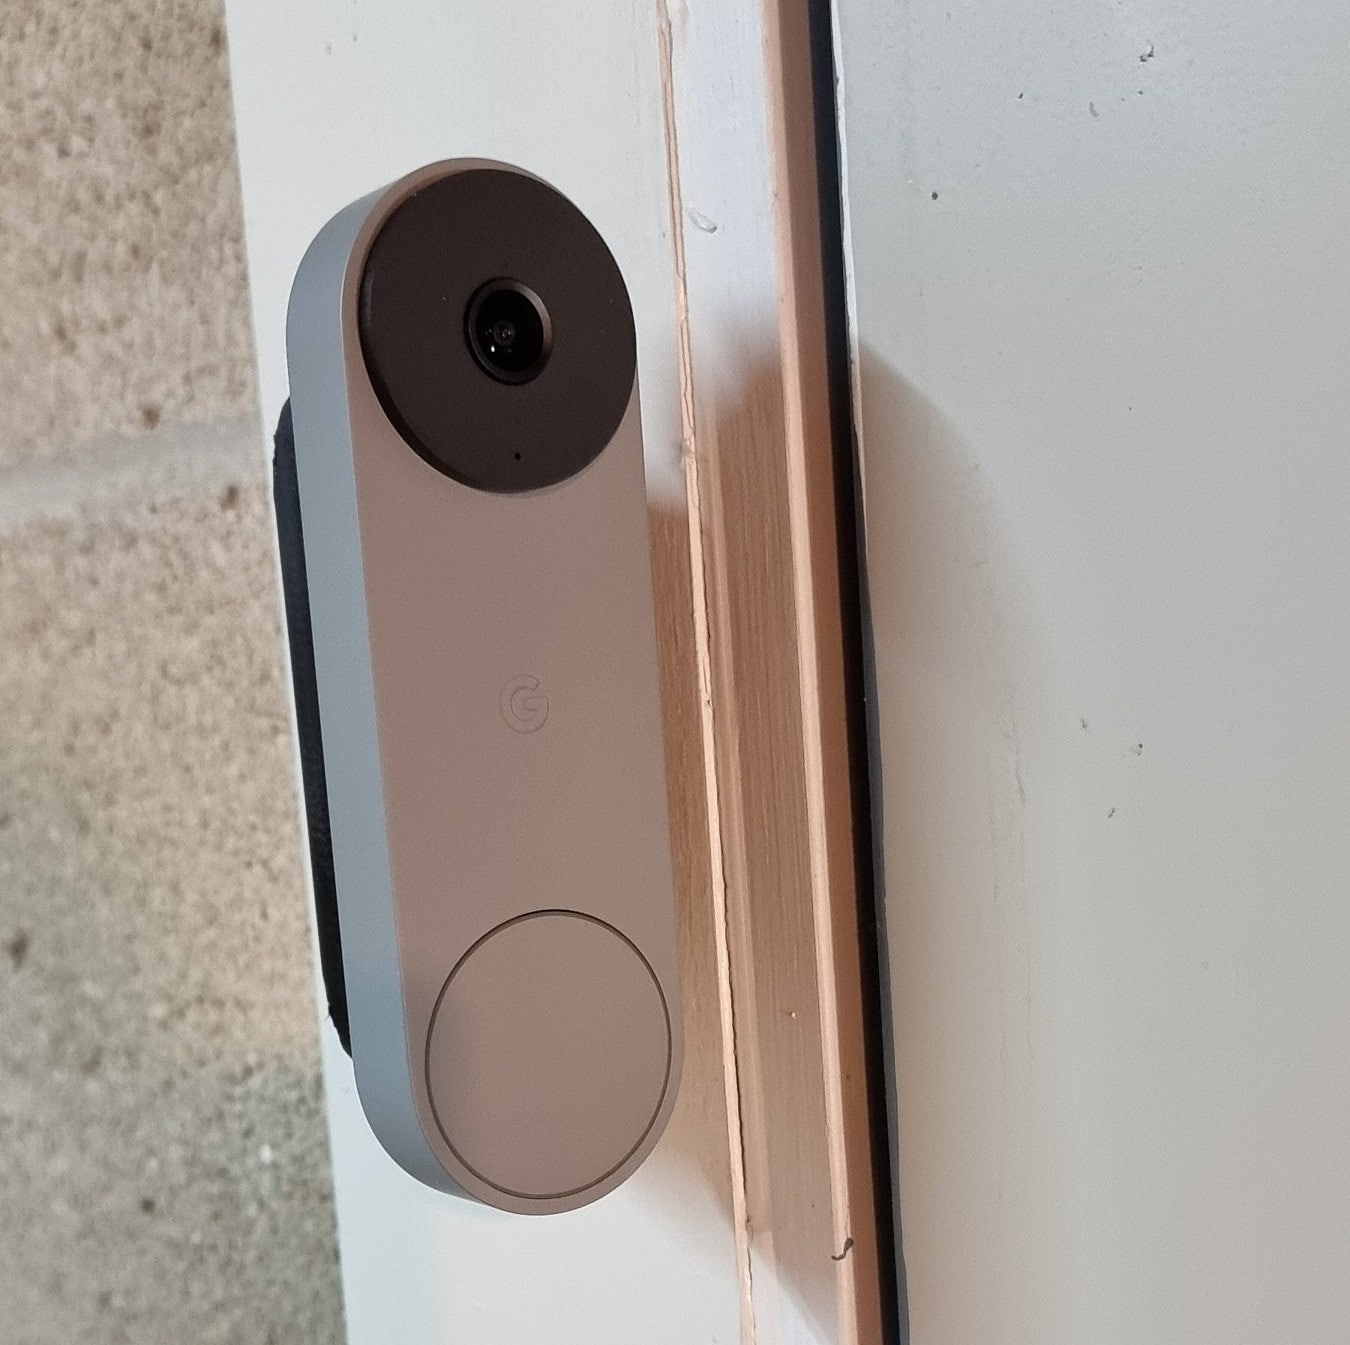 Nest Doorbell Gen 2 Wired Mount. 75 Degrees To Get The Perfect View. Our Nest Doorbell Gen 2 Mount 75 Degrees Aims Your Doorbell Perfectly